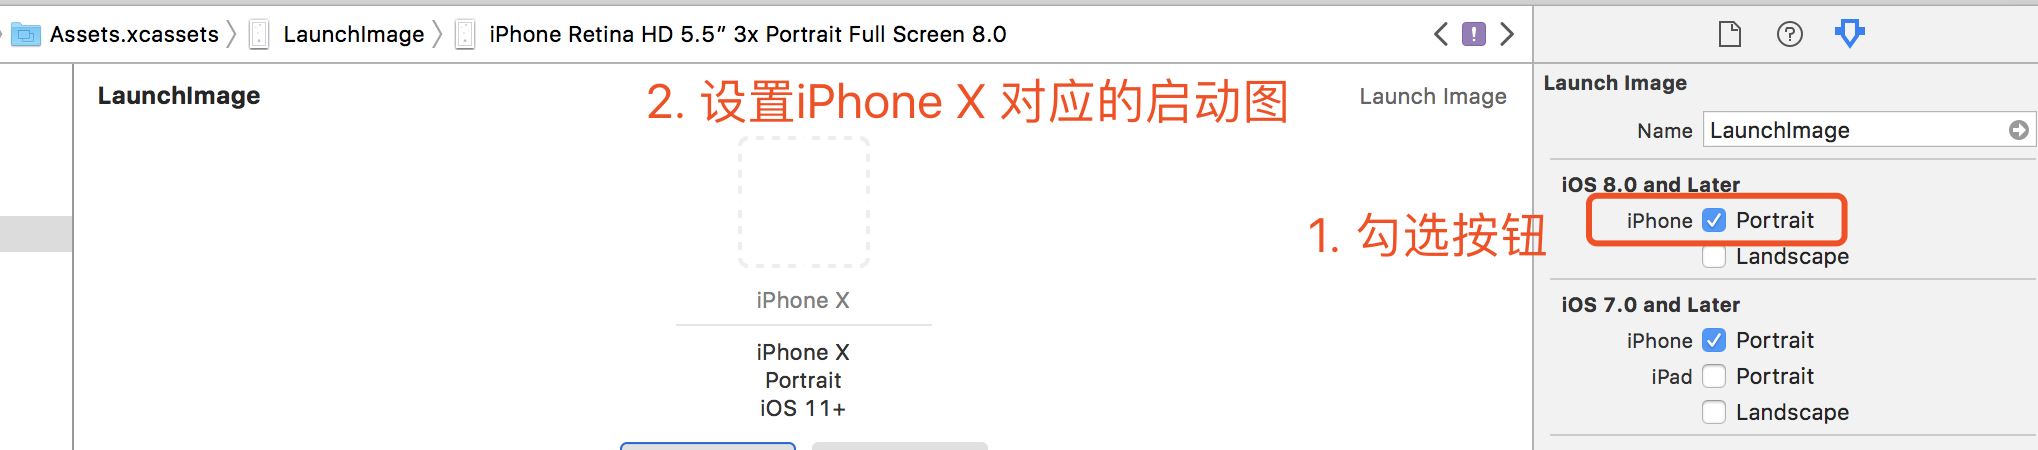 iOS11、iPhone X、Xcode9如何适配